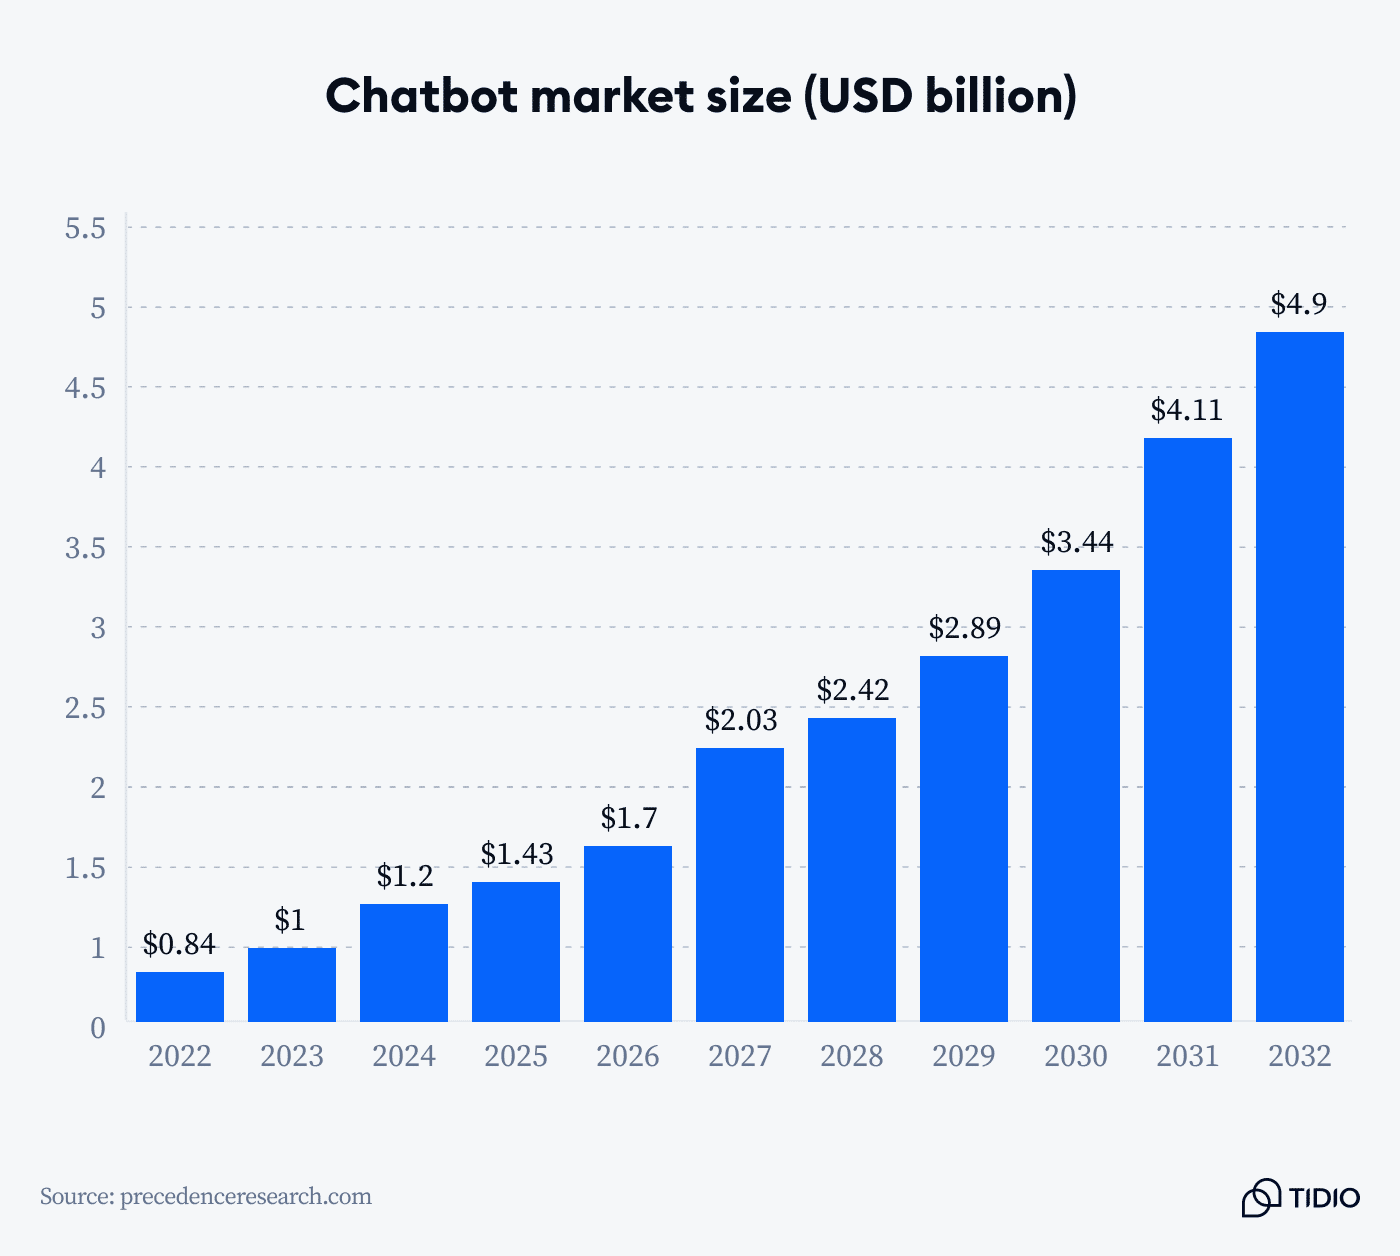 Chatbot market size